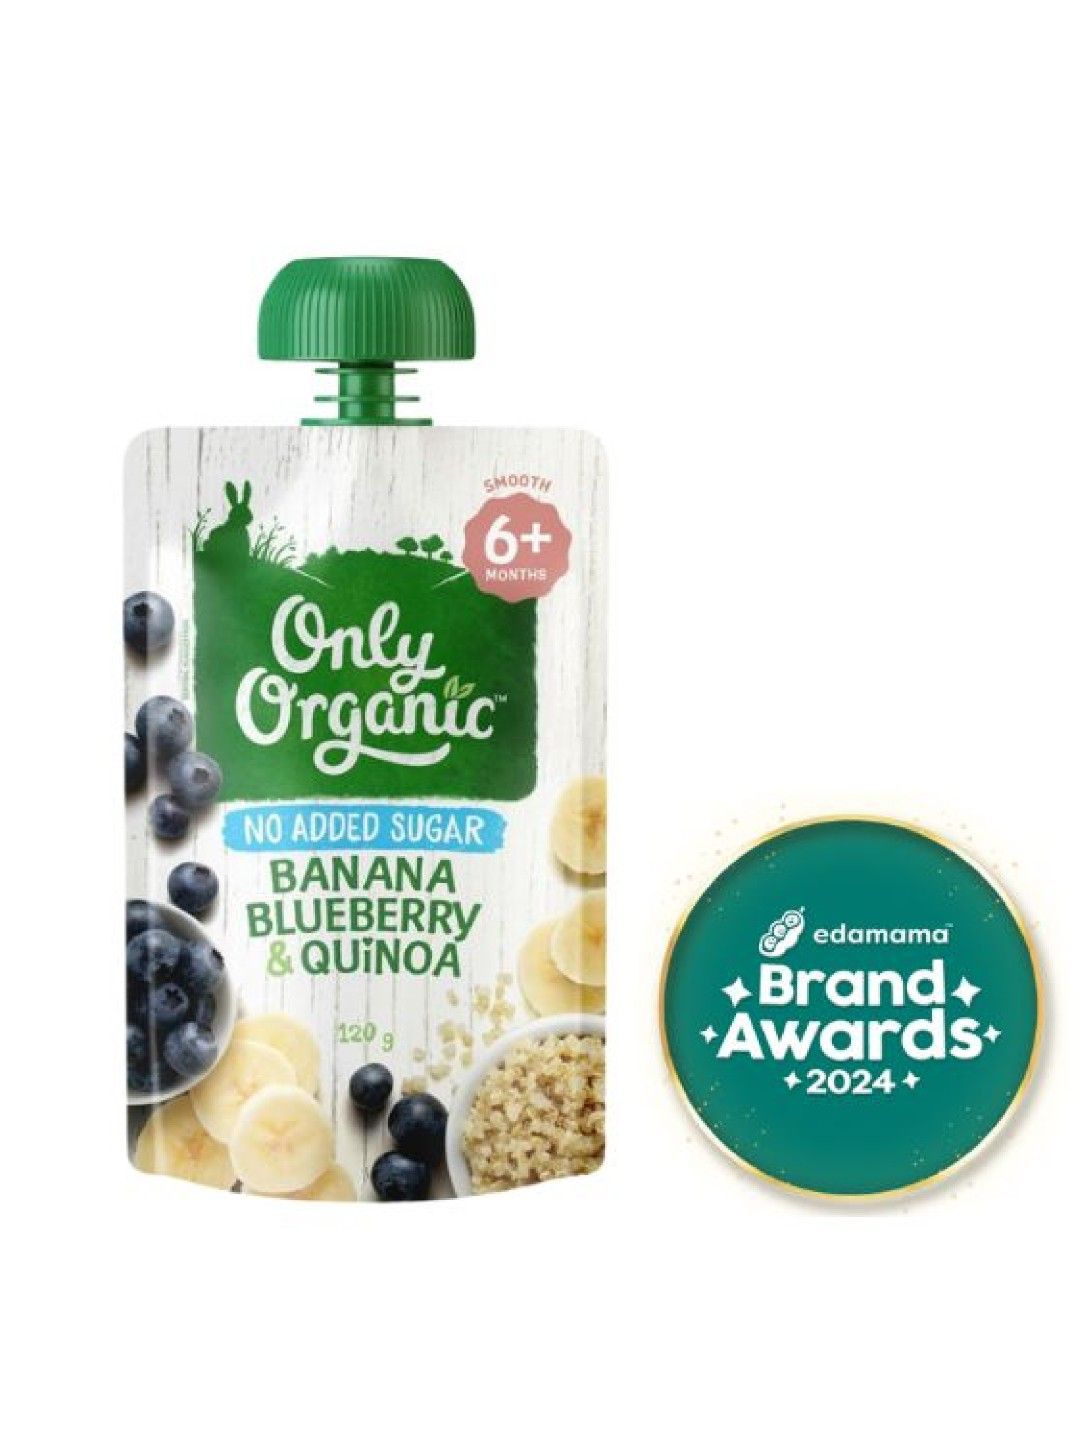 Only Organic Banana, Blueberry & Quinoa Puree (120g)